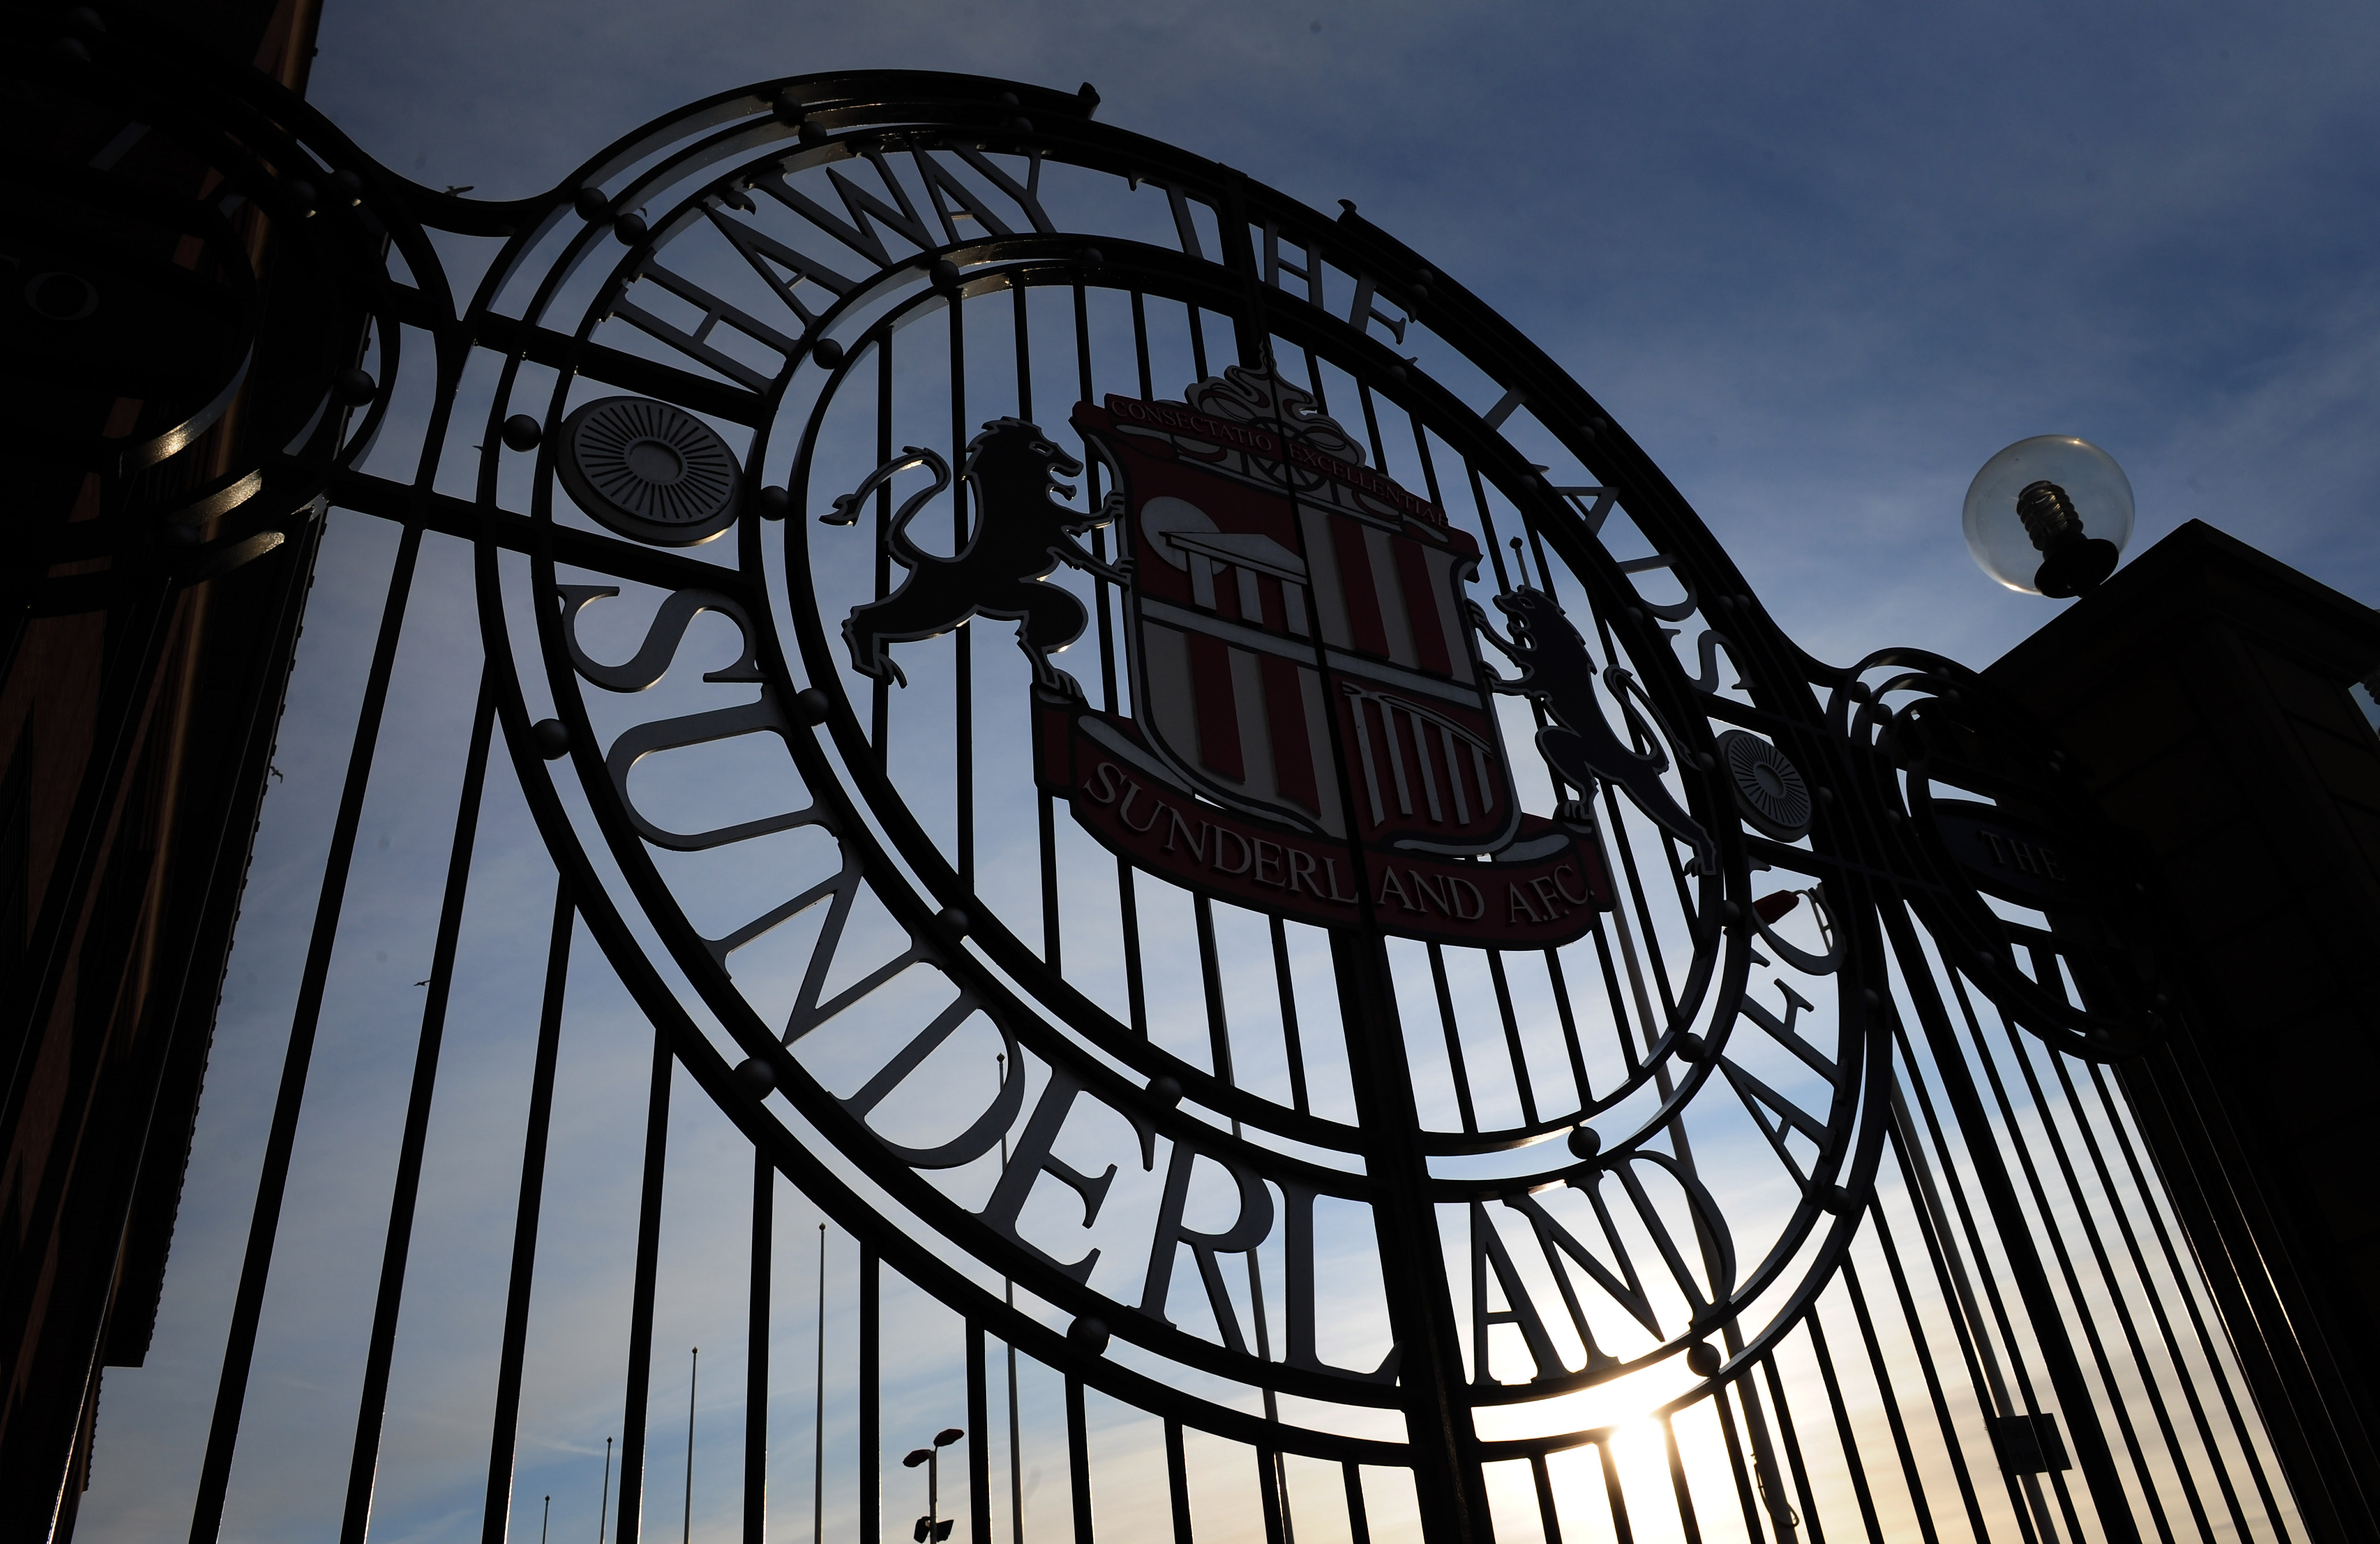 Sunderland Unveil New Manager - Martin O’Neill